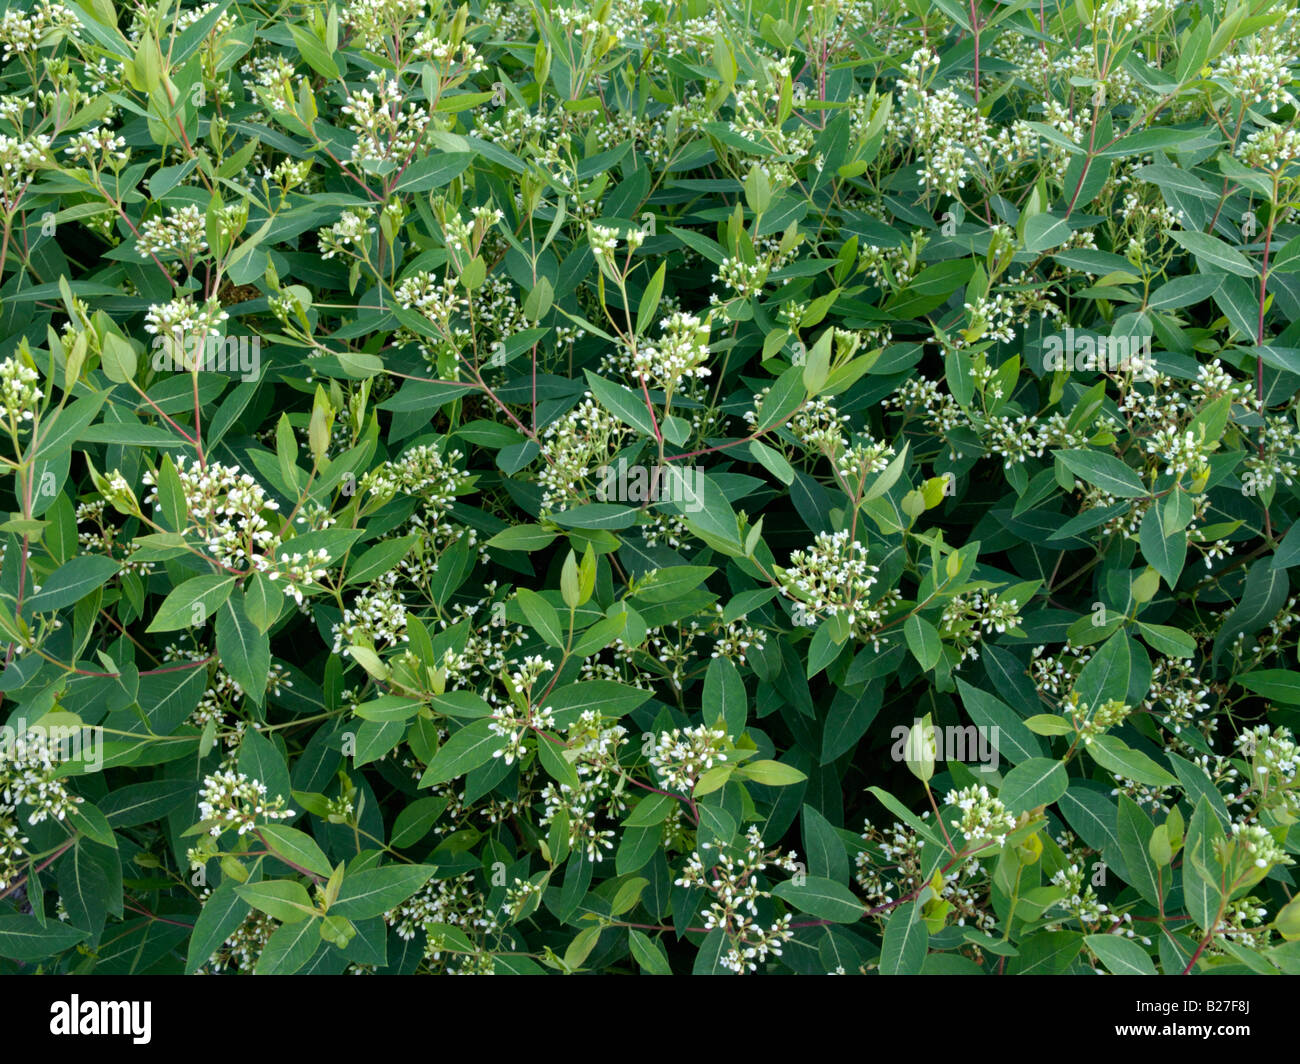 American dogbane (Apocynum cannabinum) Stock Photo